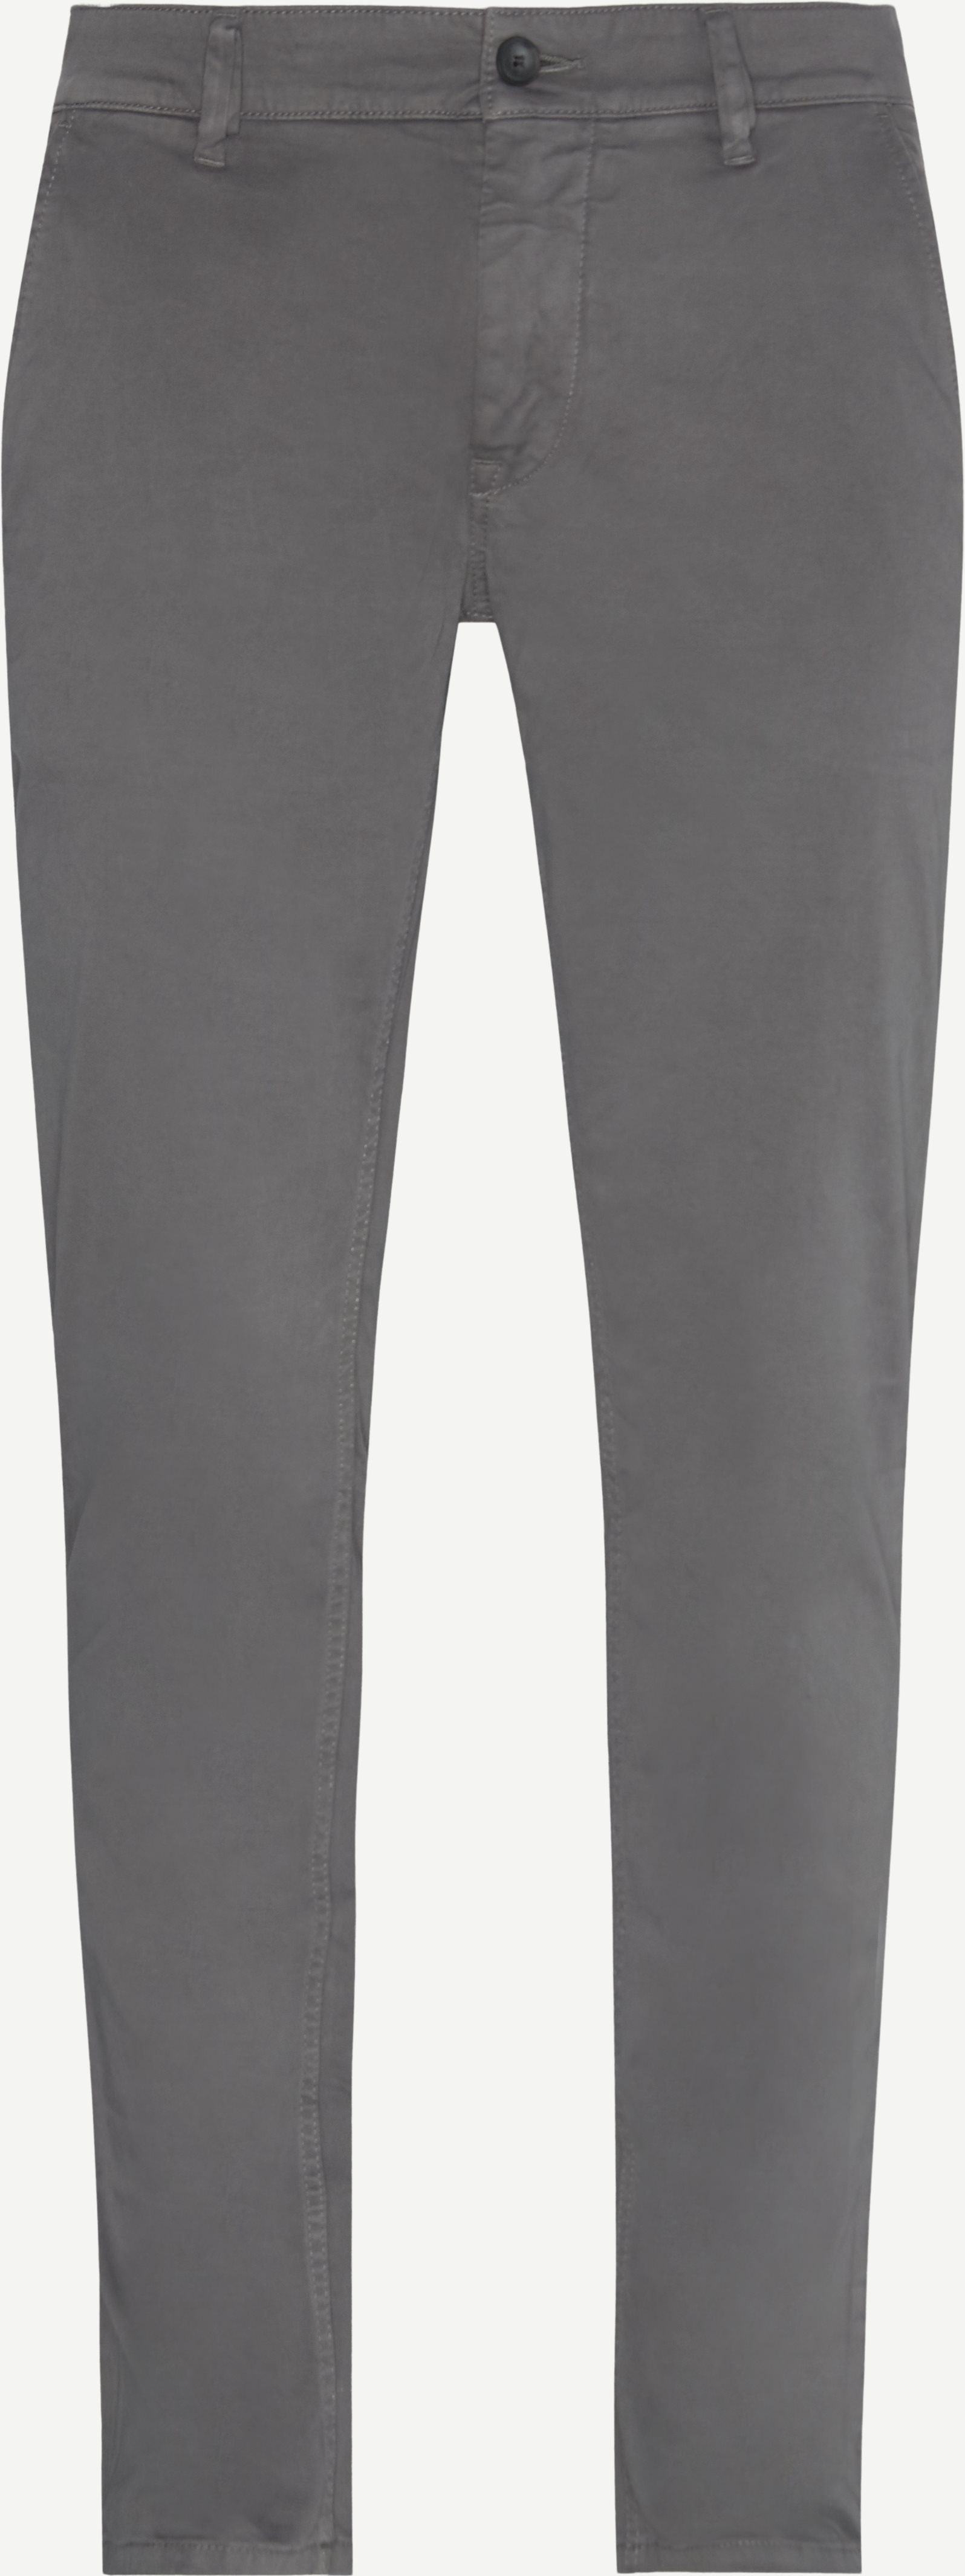 Schino Chinos - Trousers - Slim fit - Grey